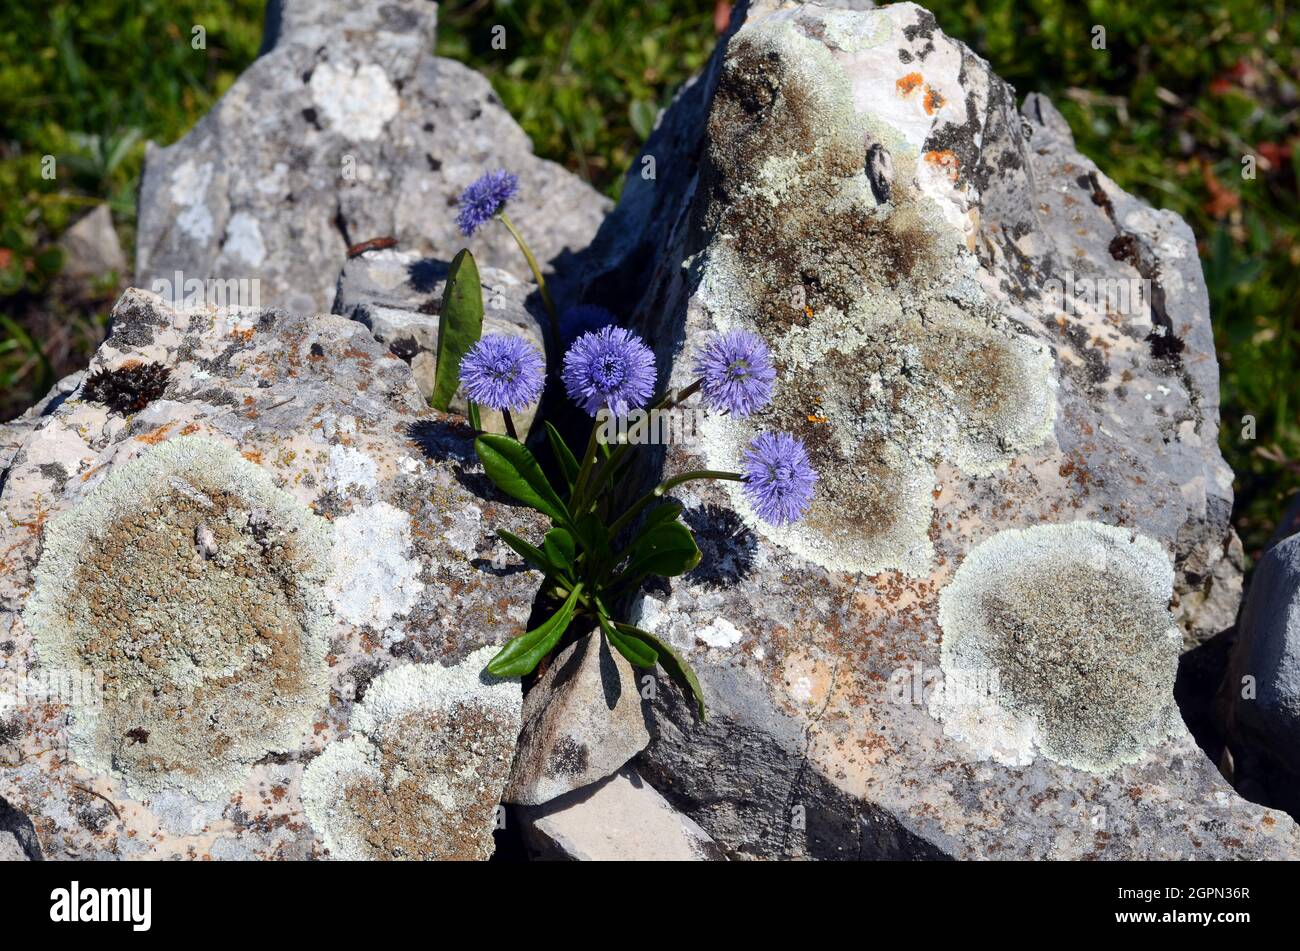 Globularia nudicaulis flowers growing on rocks Stock Photo